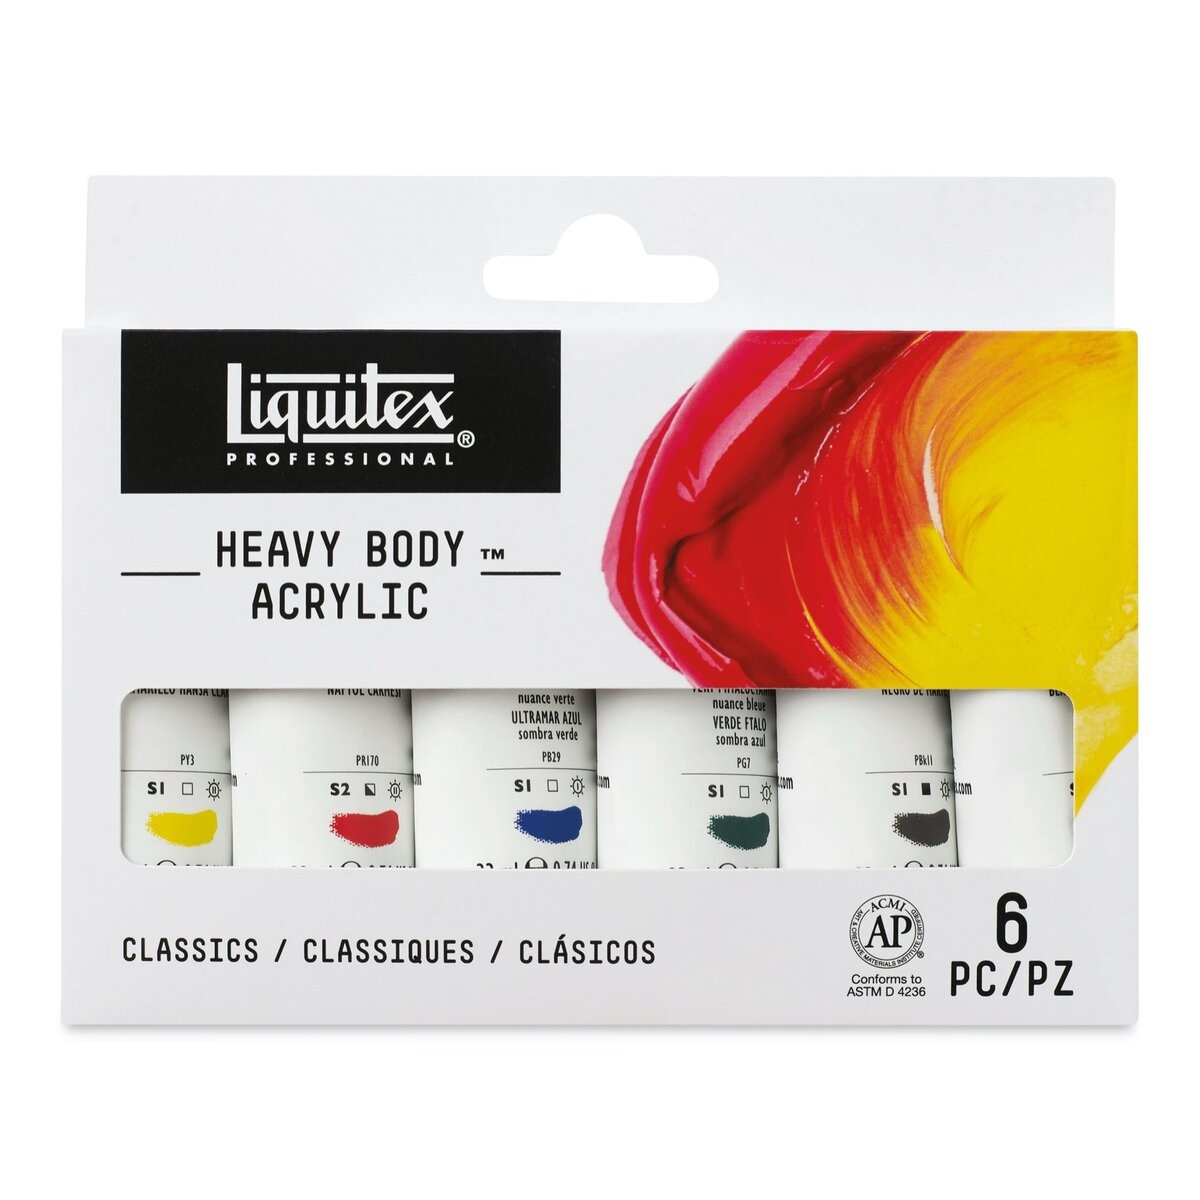 Liquitex Professional Heavy Body Acrylic Paint, 50,000+ Art Supplies